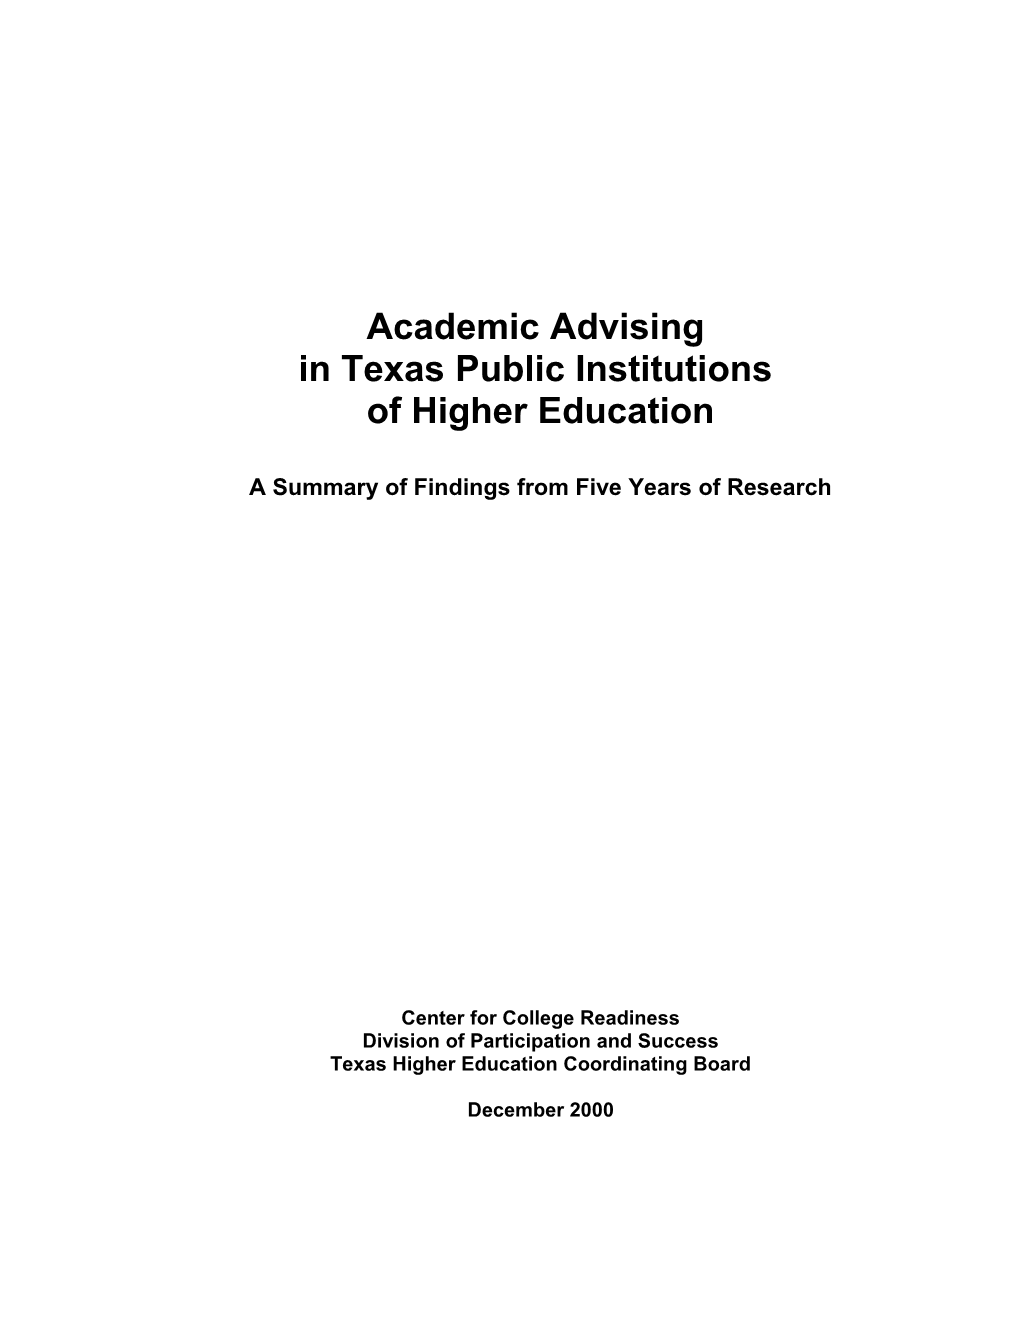 Academic Advising in Texas Public Institution of Higher Education